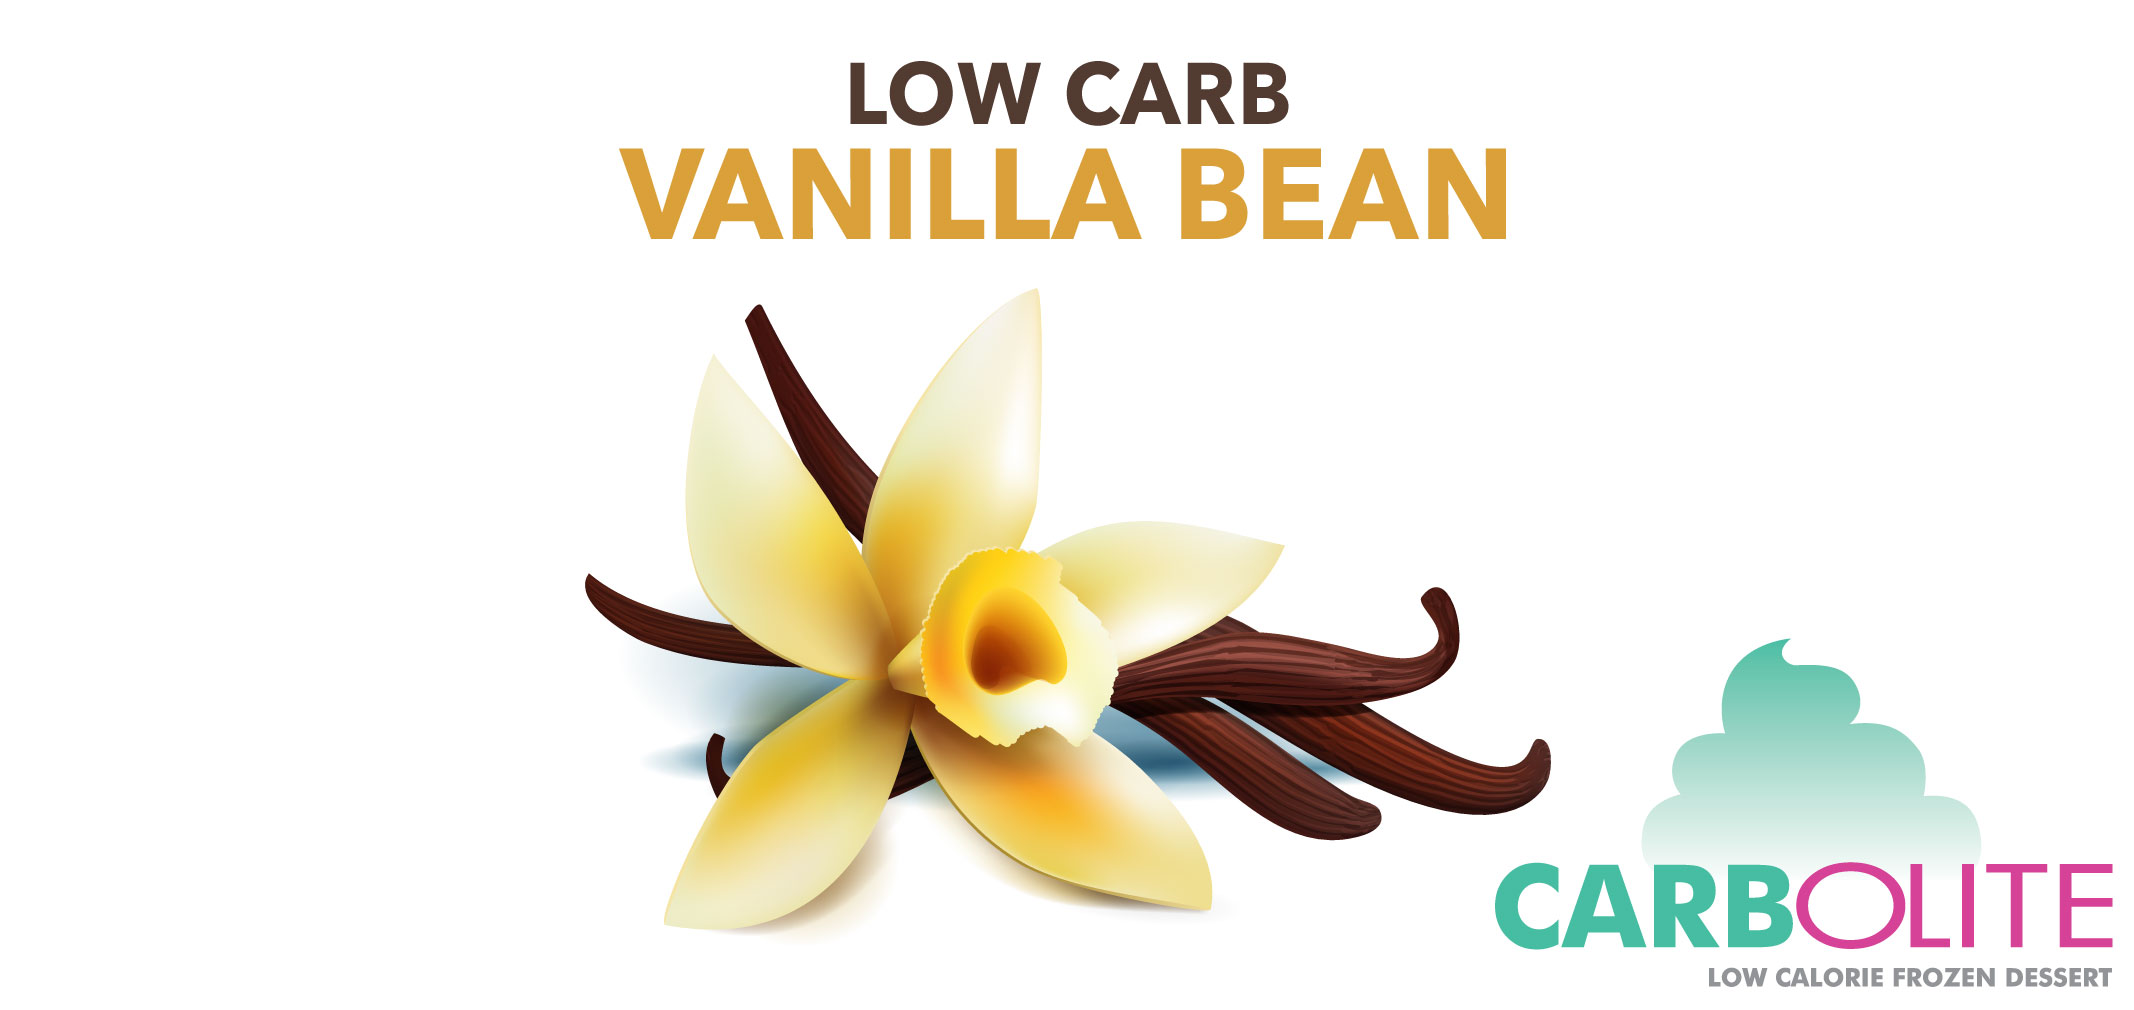 carbolite low carb no sugar added vanilla bean label image